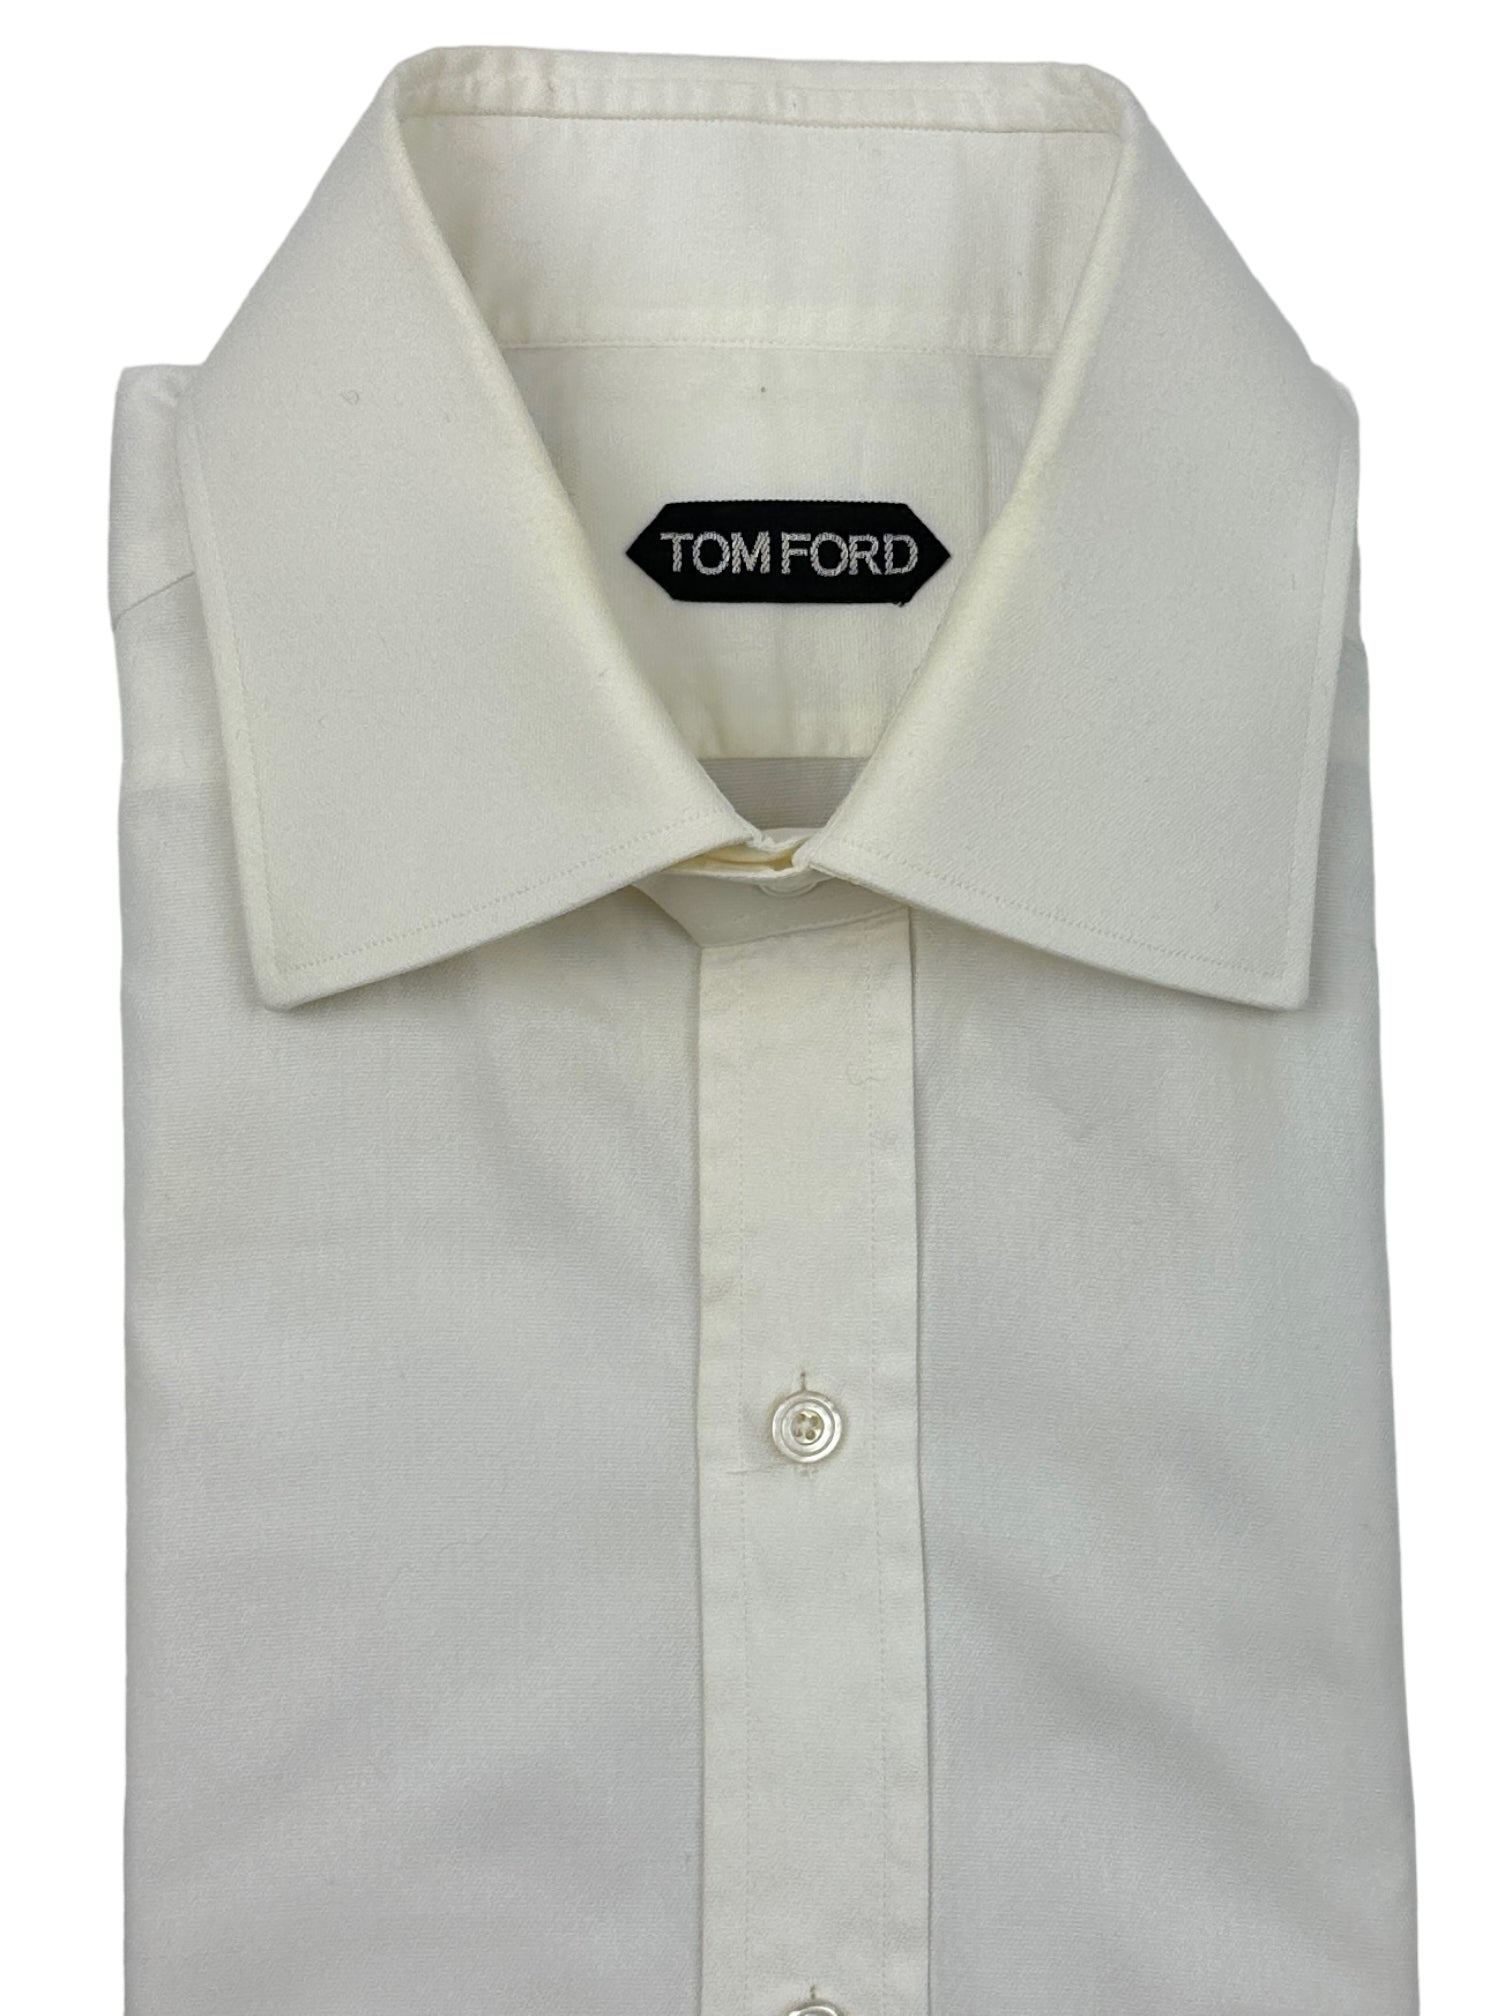 Tom Ford gebroken wit dobby shirt